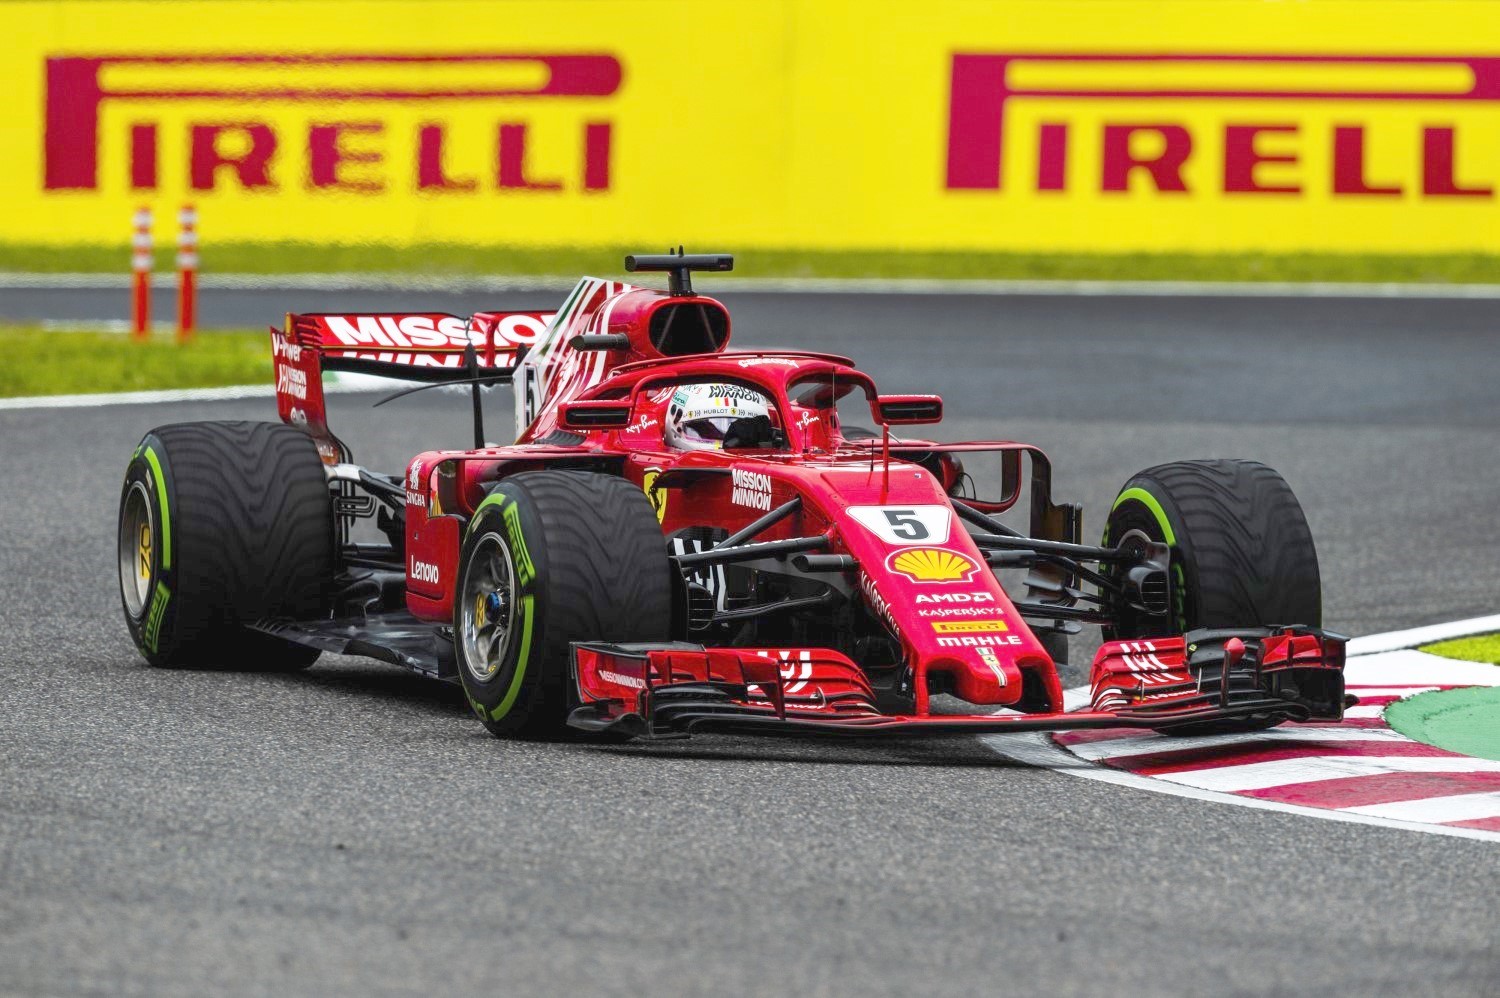 Vettel cannot win - the Ferrari is not designed by Aldo Costa